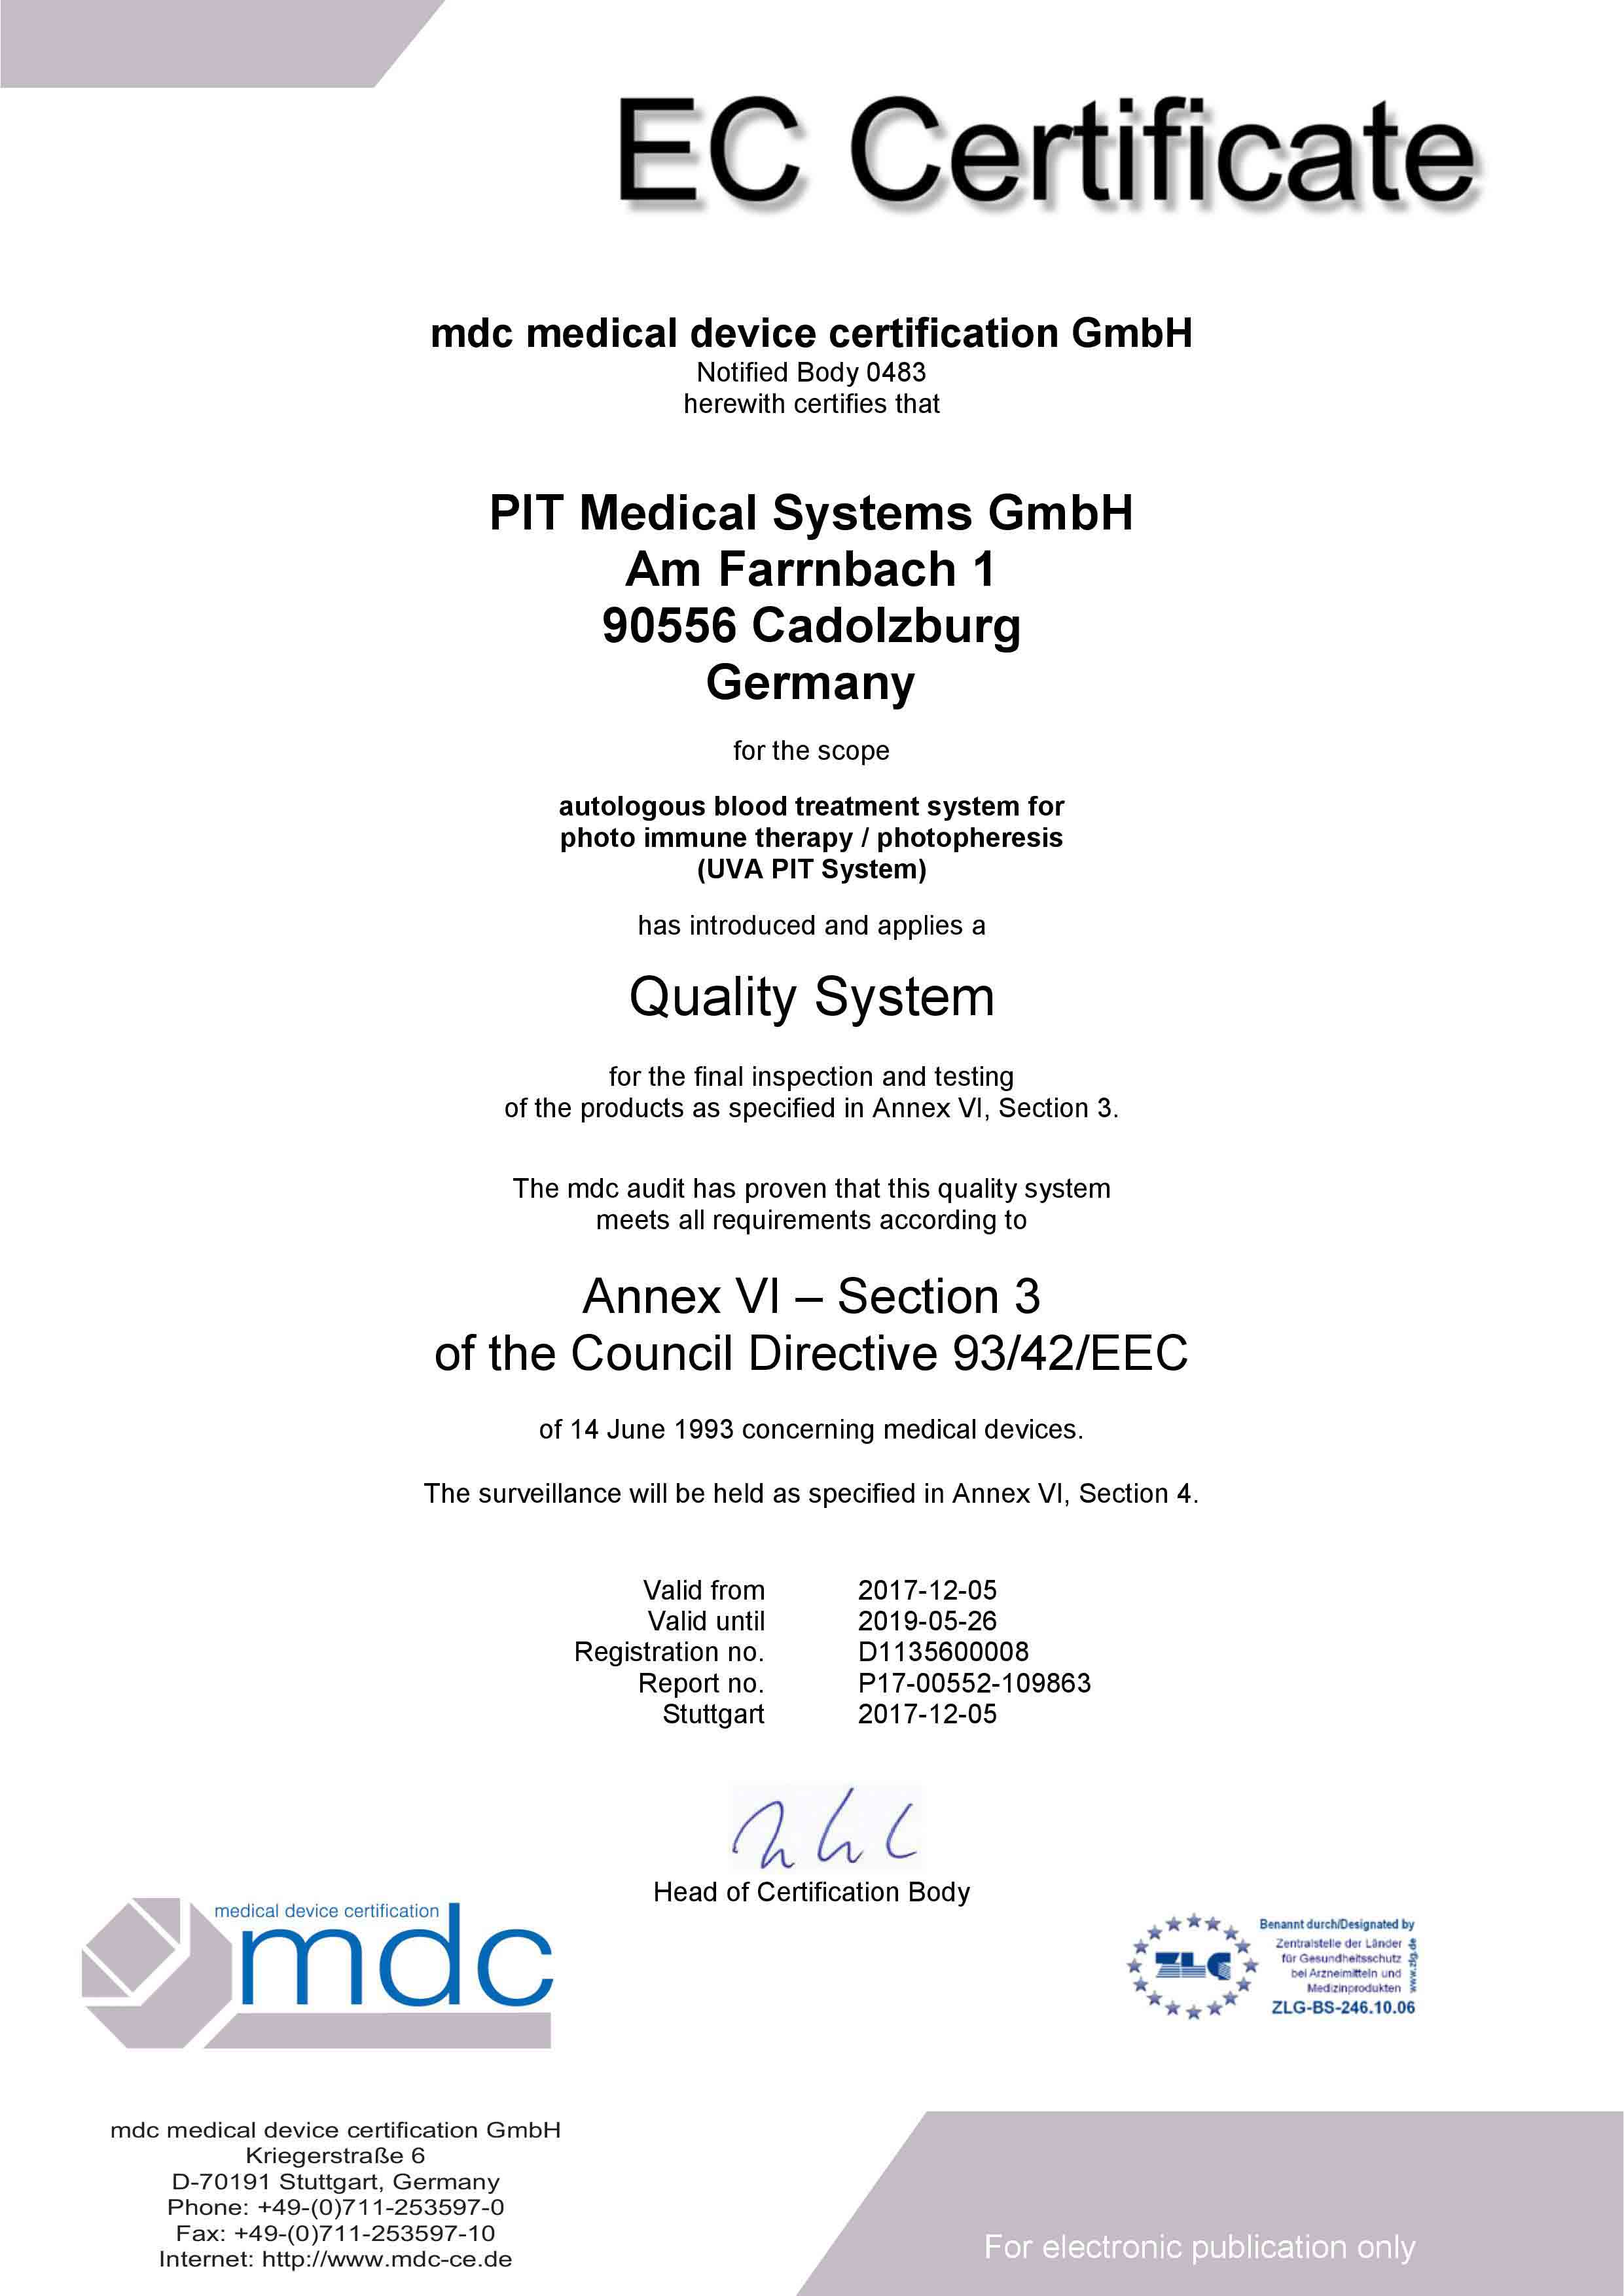 EC Certificate_PIT Medical Systems_D1135600008_E